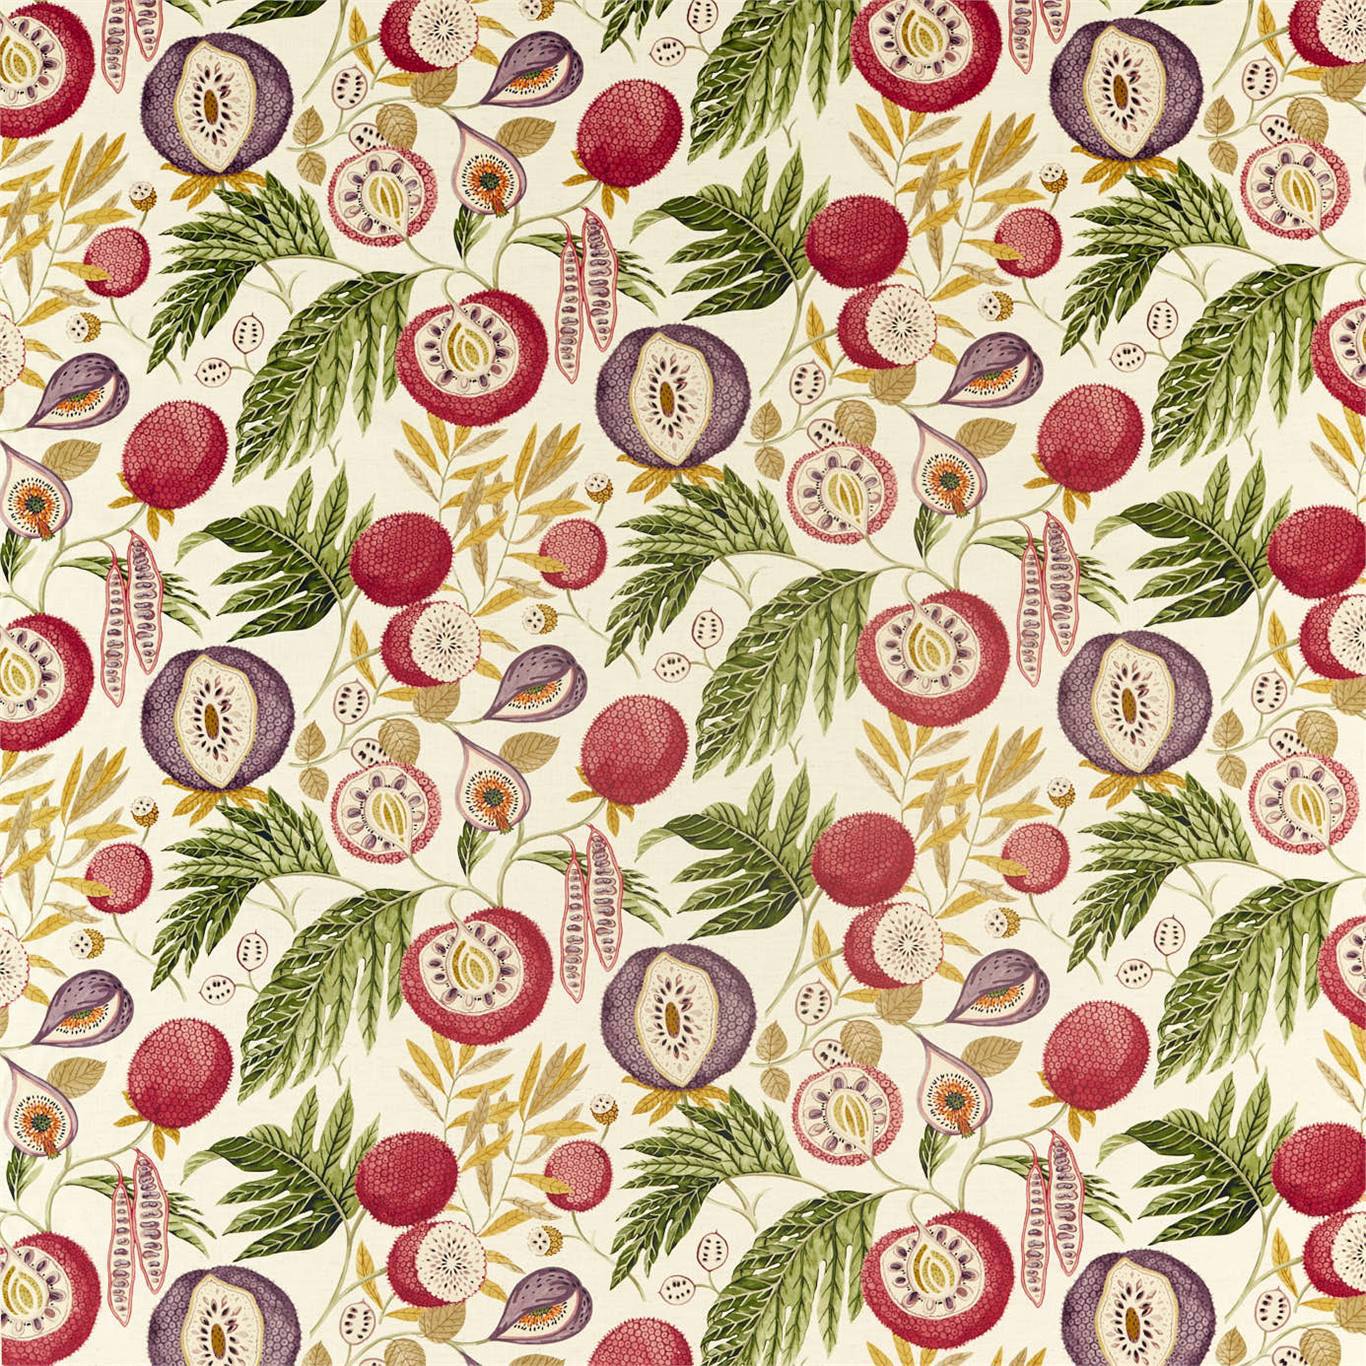 Jackfruit Fabric by Sanderson